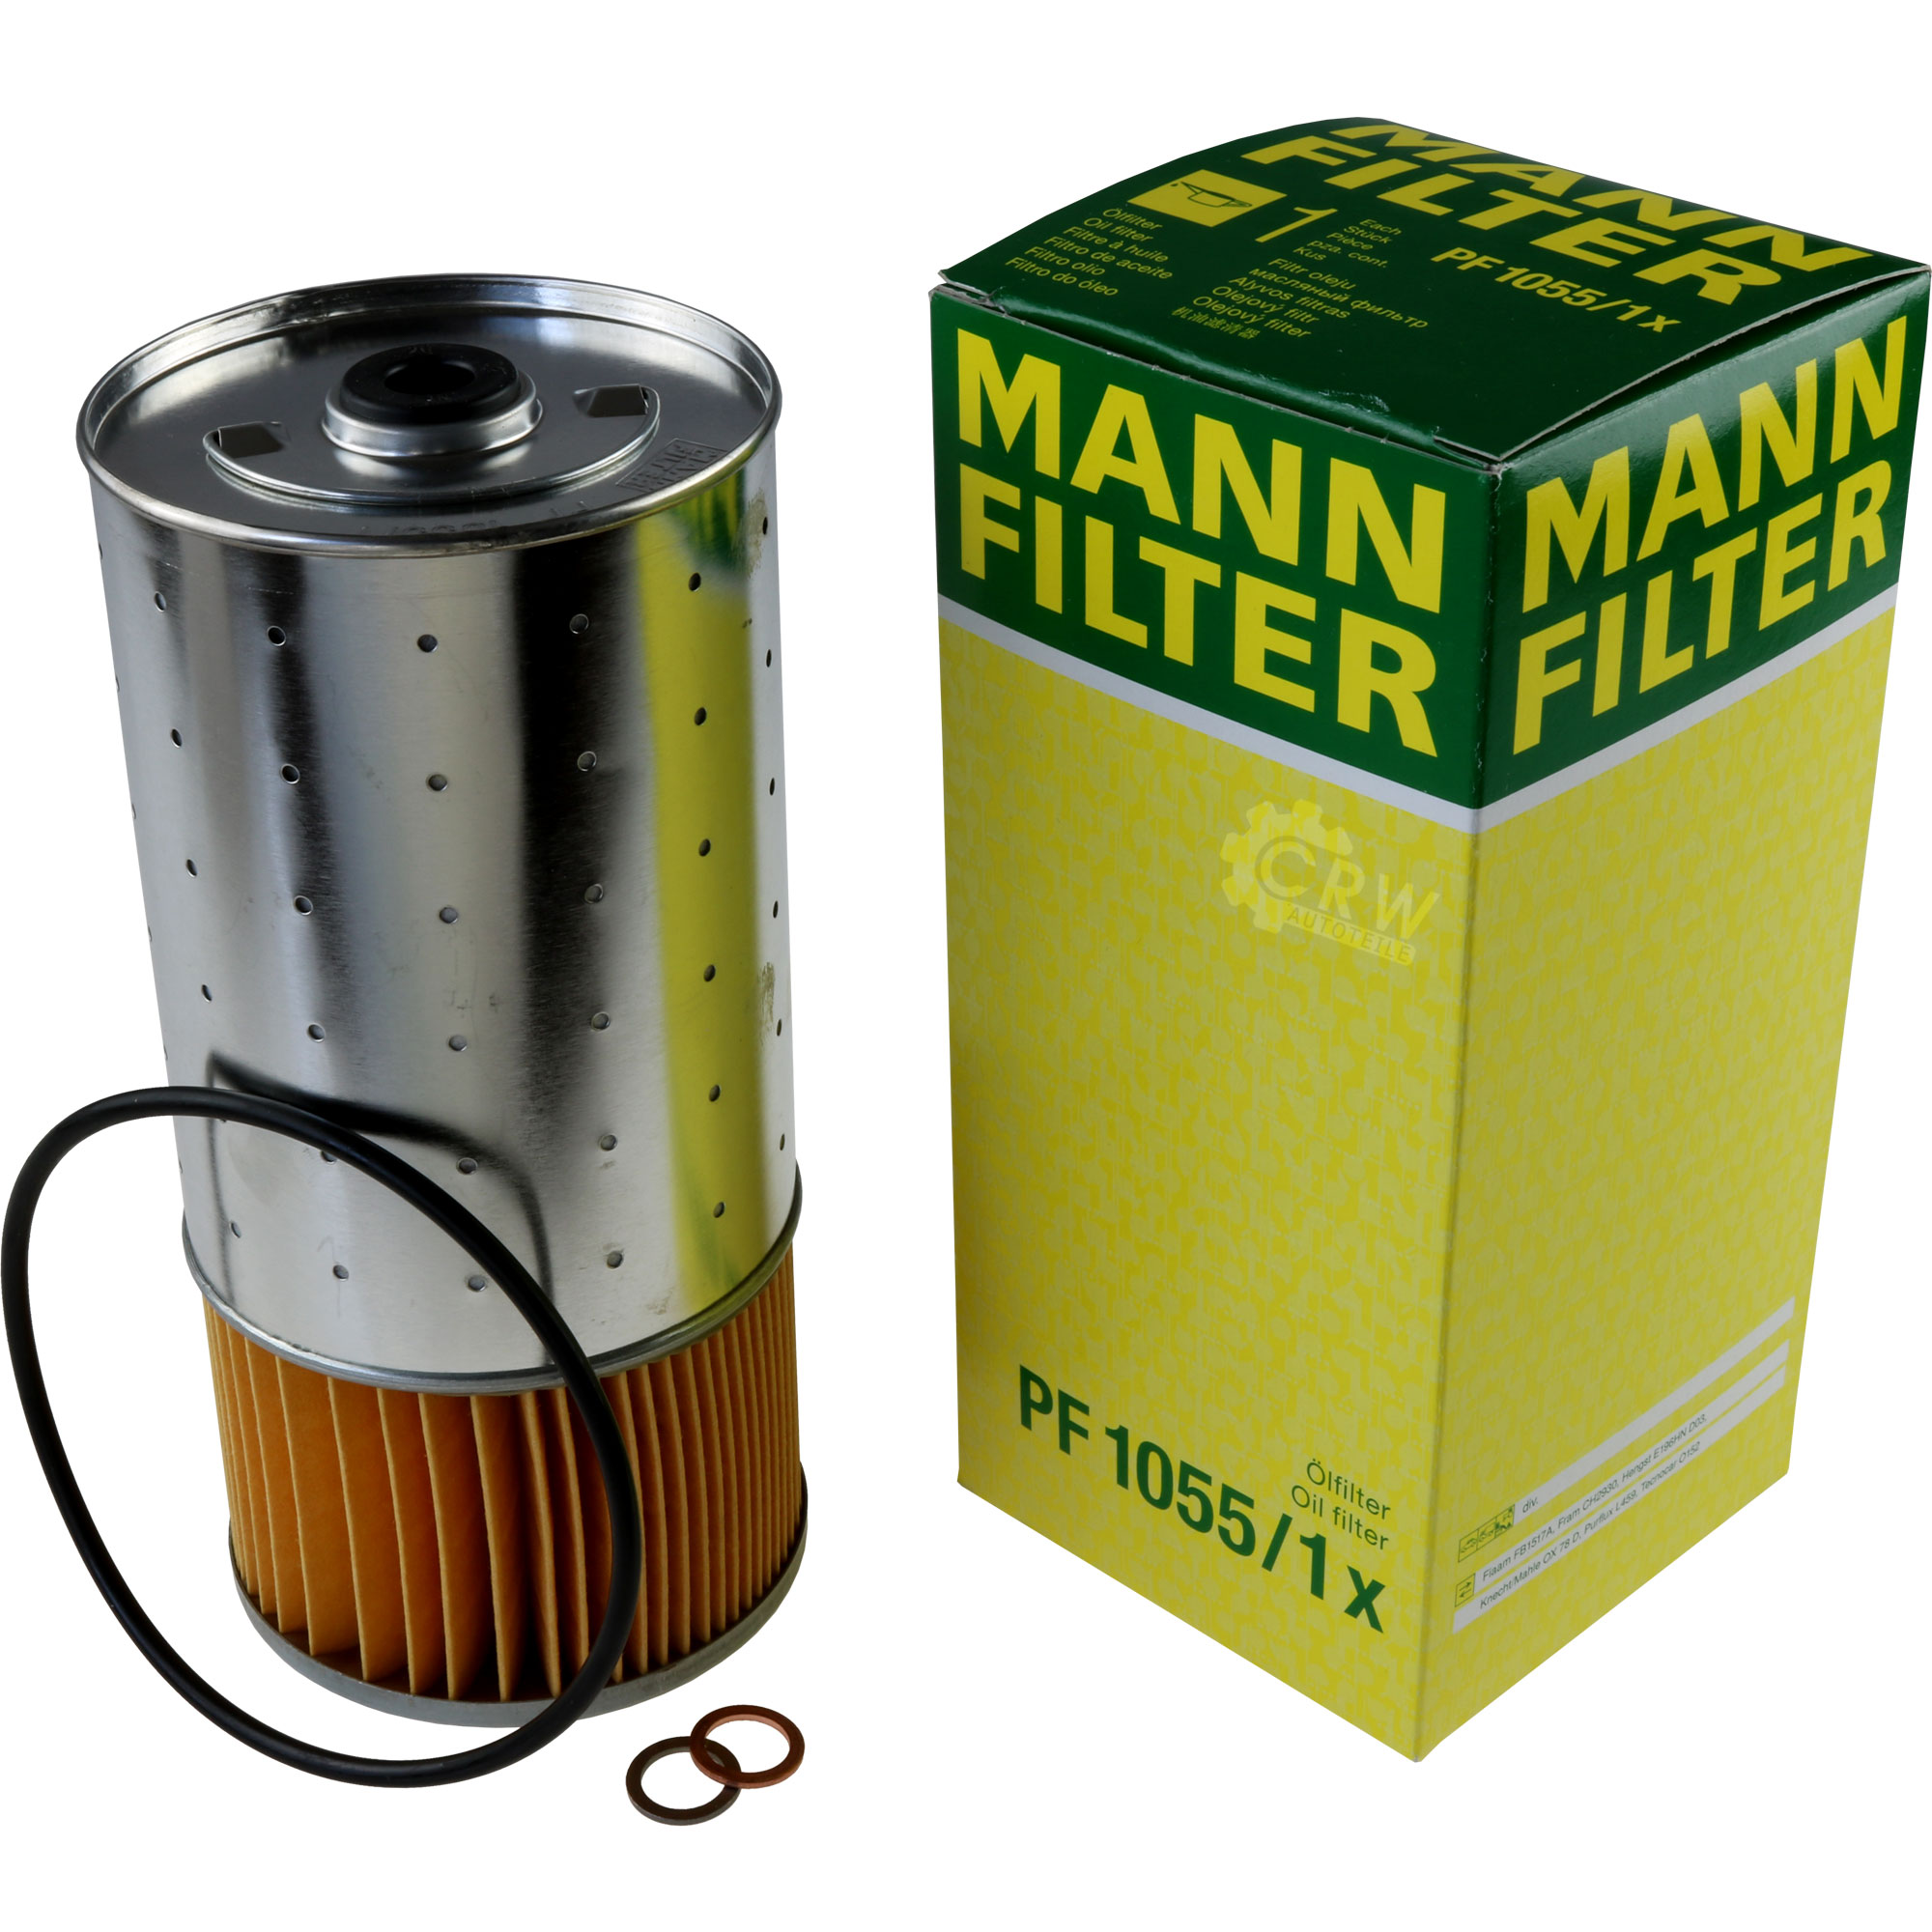 MANN-FILTER Ölfilter Oelfilter PF 1055/1 x Oil Filter